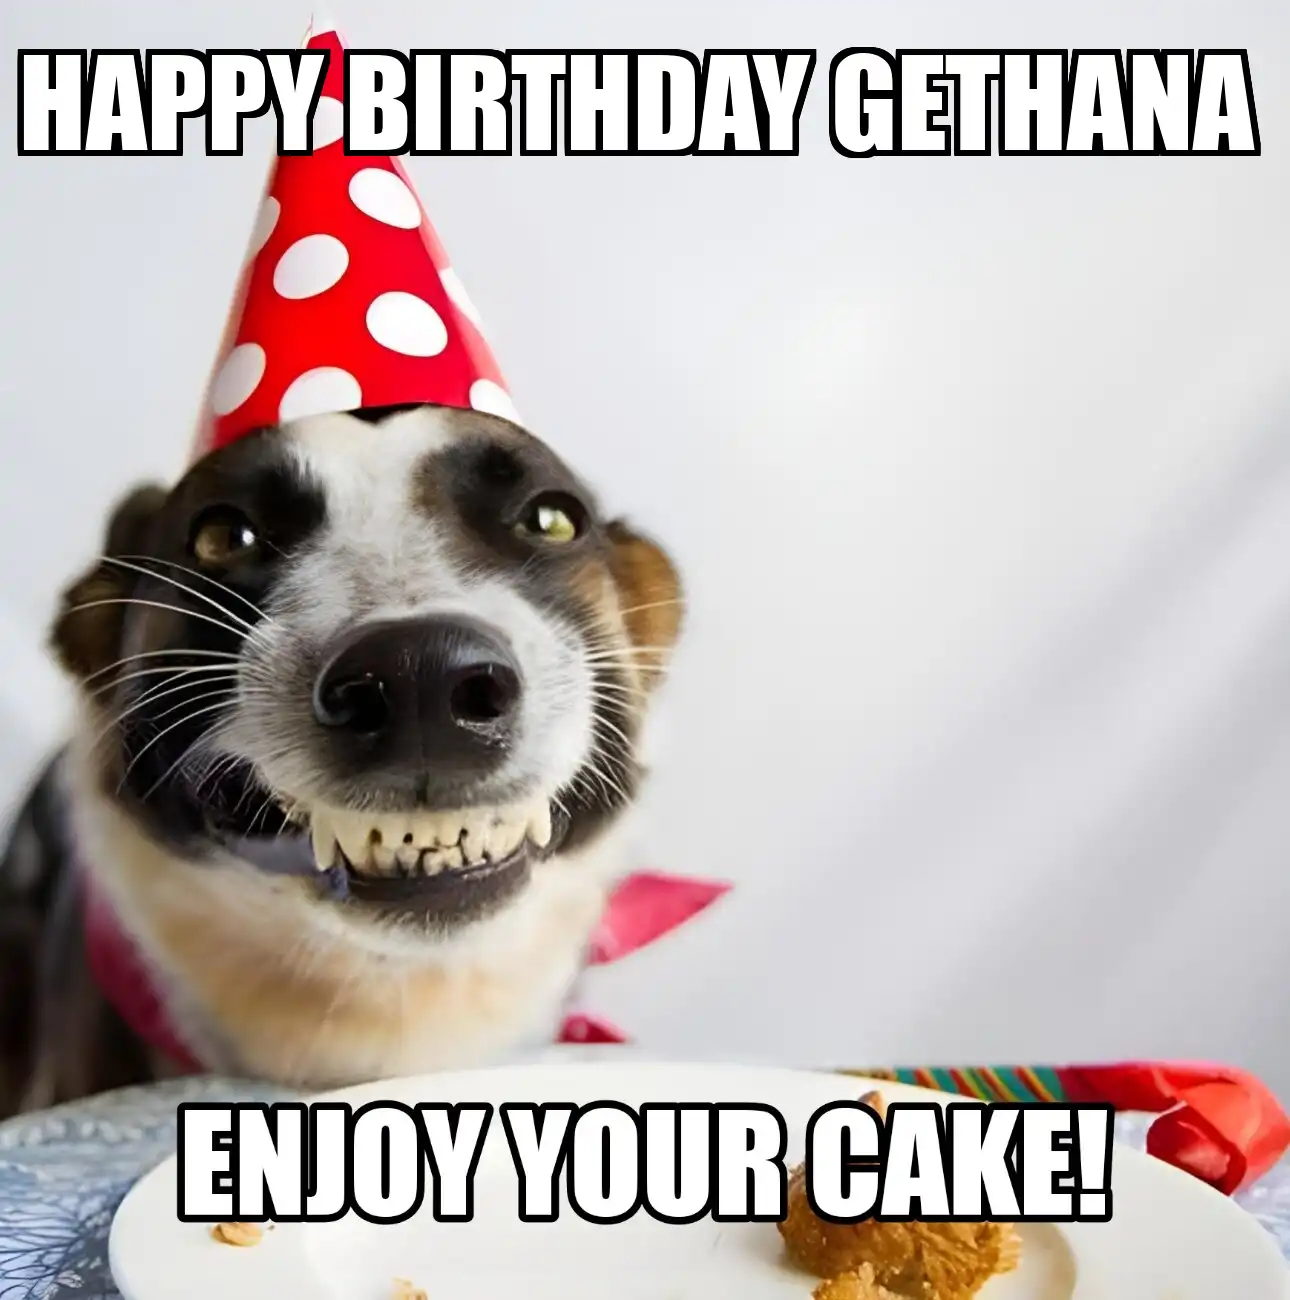 Happy Birthday Gethana Enjoy Your Cake Dog Meme